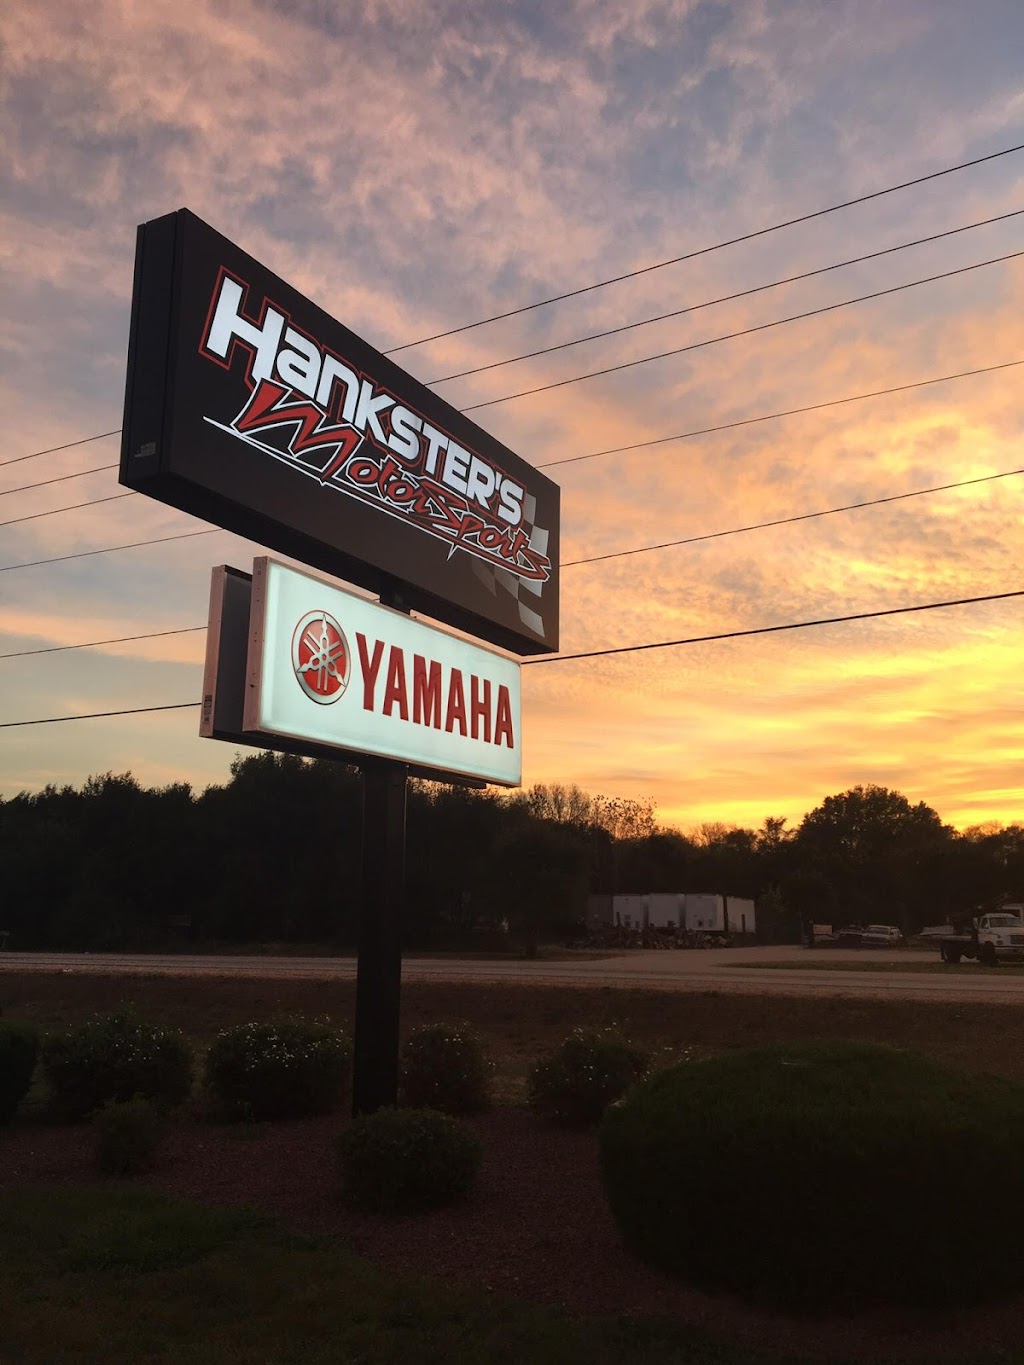 Hanksters Motorsports | Powersports & Motorsports Dealer In Janesville, WI | 6319 US-51, Janesville, WI 53546, USA | Phone: (608) 289-0320